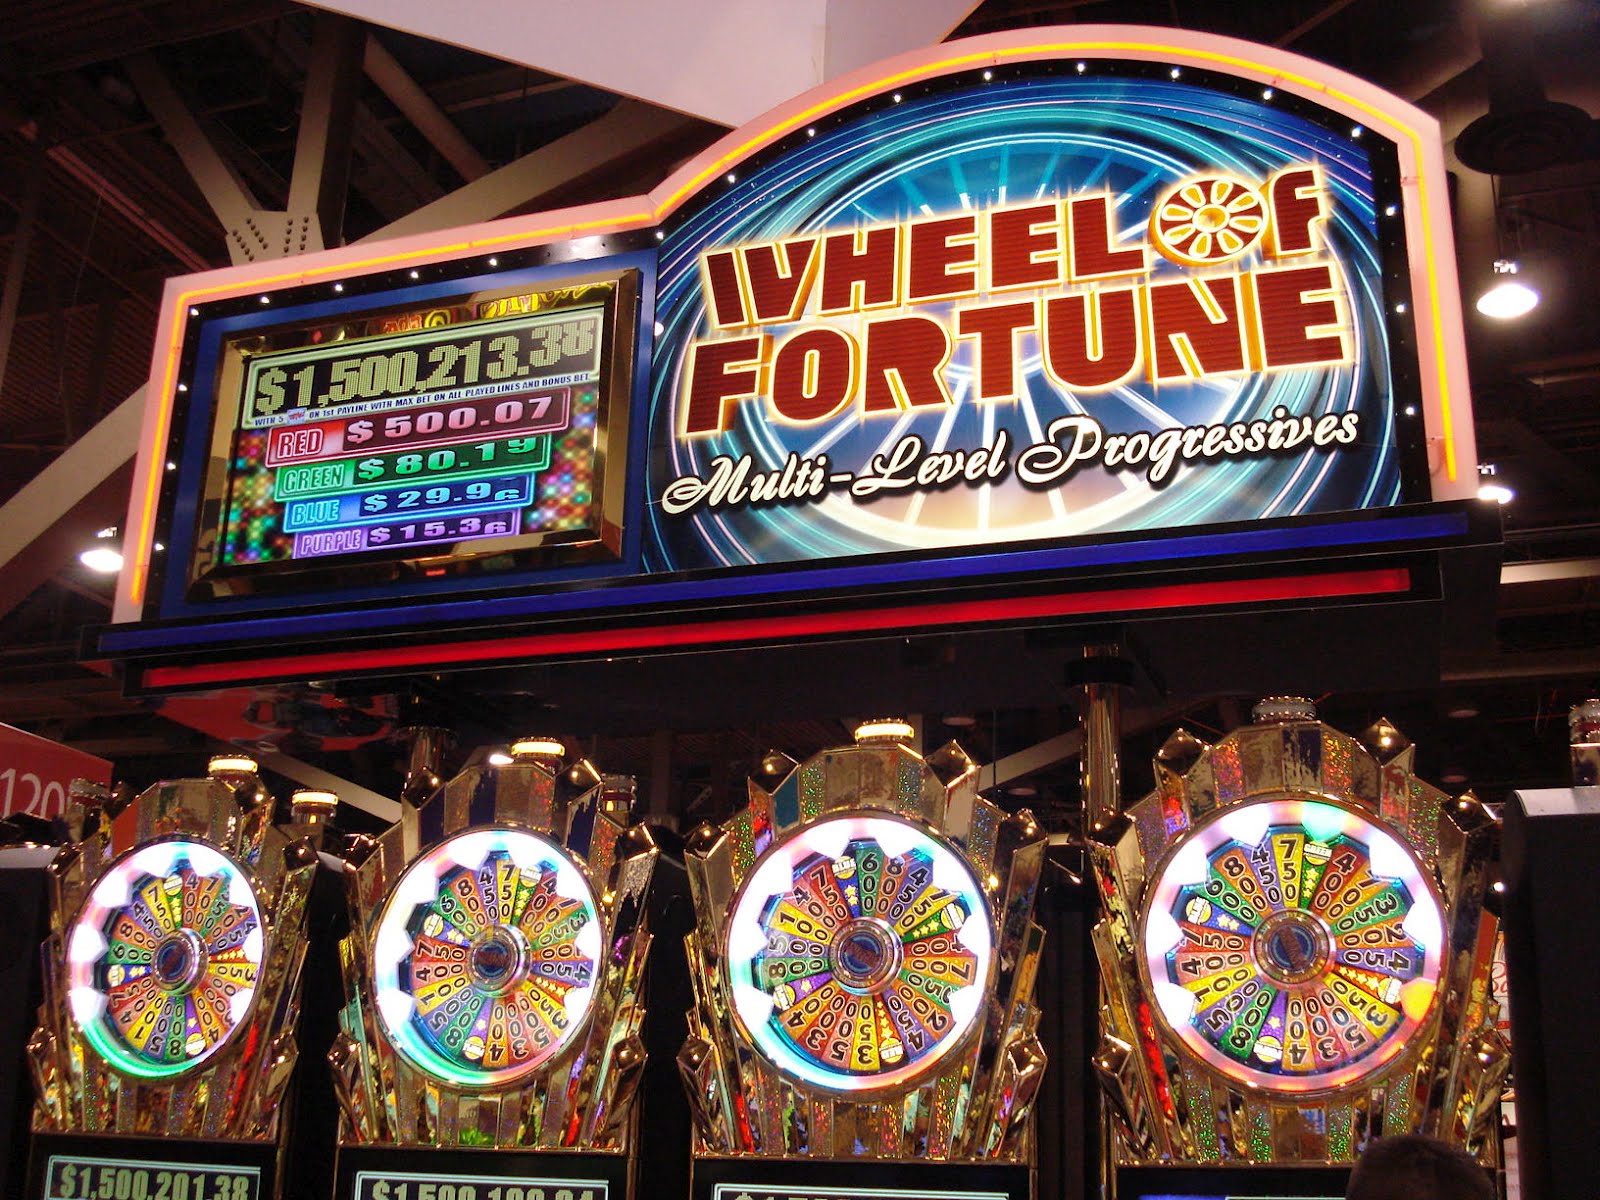 Crusade of Fortune Slots Machine